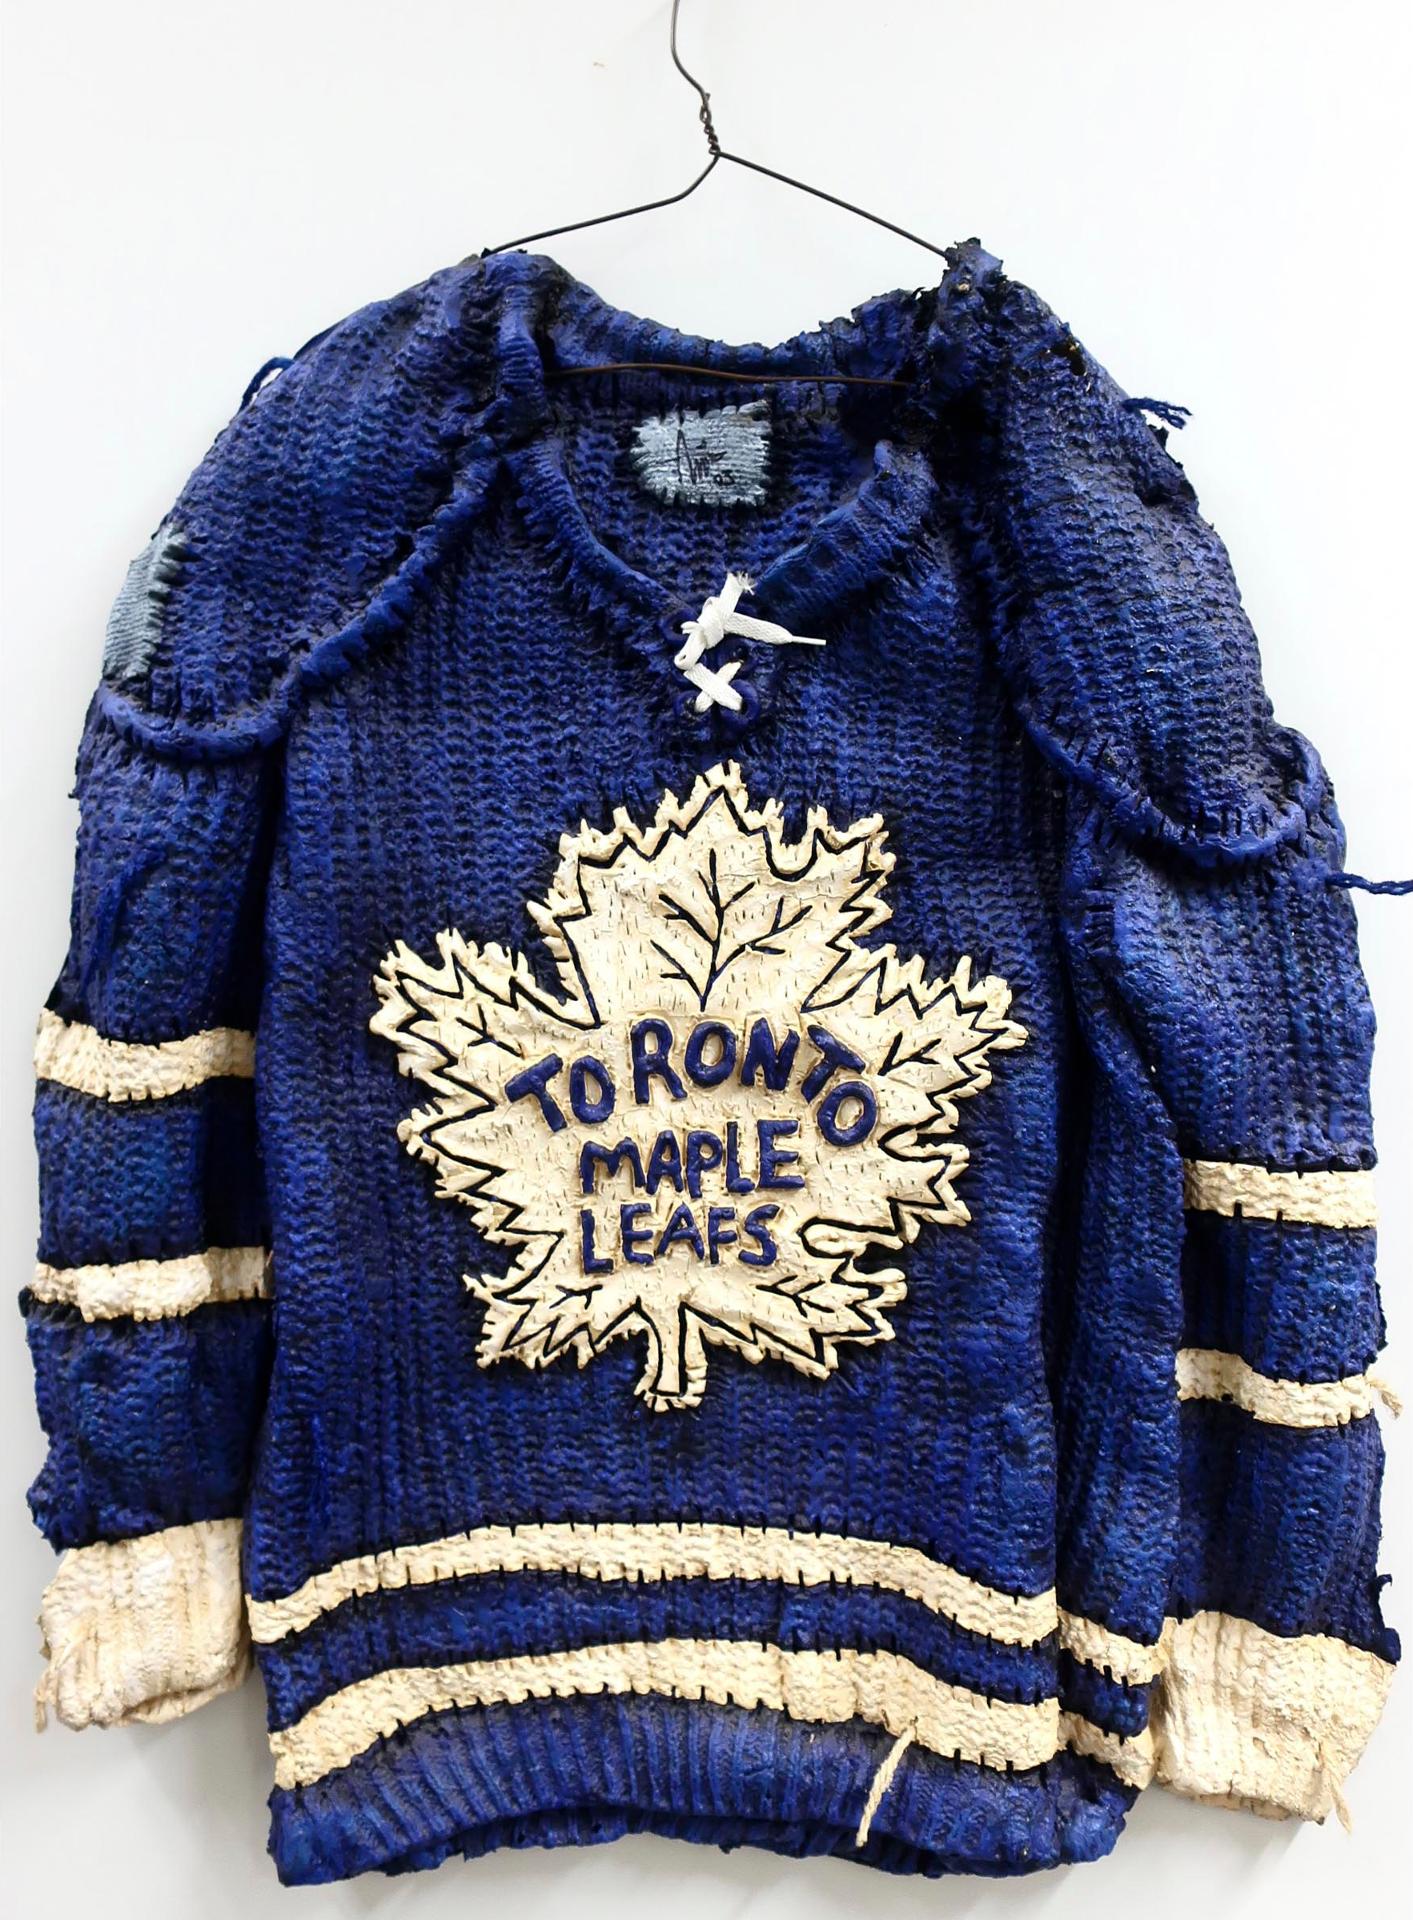 Patrick Amiot (1960) - Toronto Maple Leafs Jersey